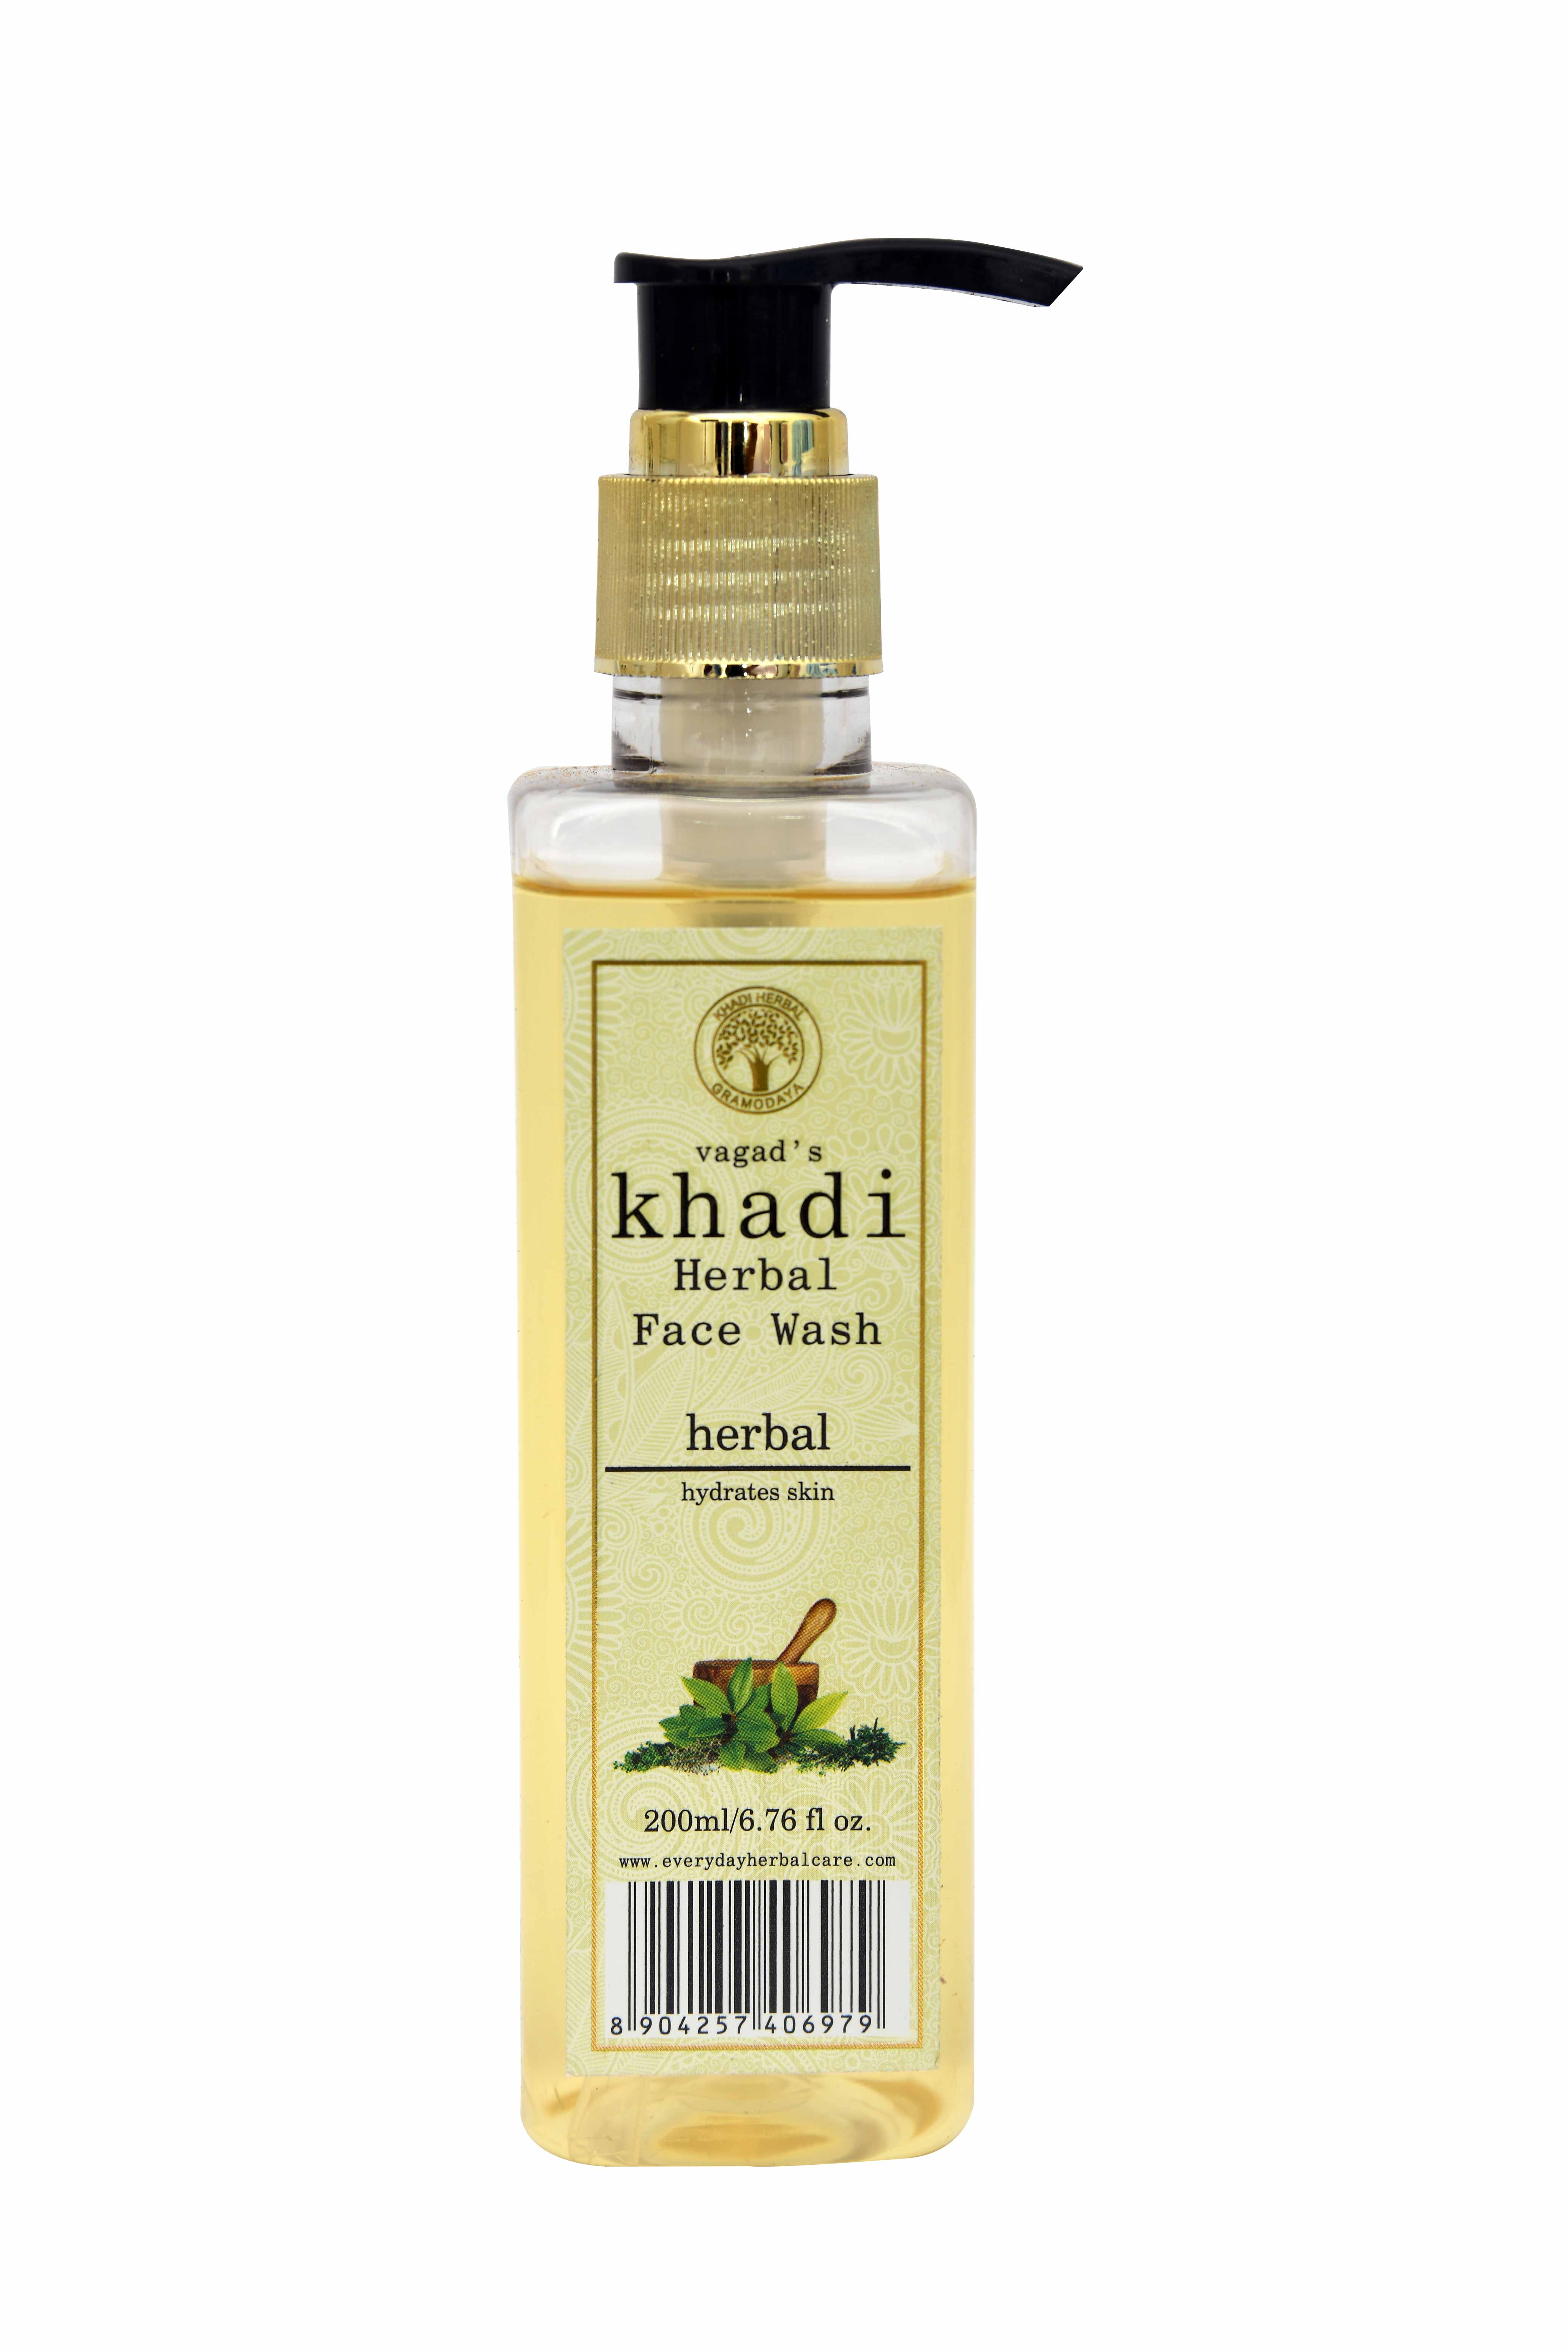 Buy Vagad's Khadi Herbal Face Wash at Best Price Online